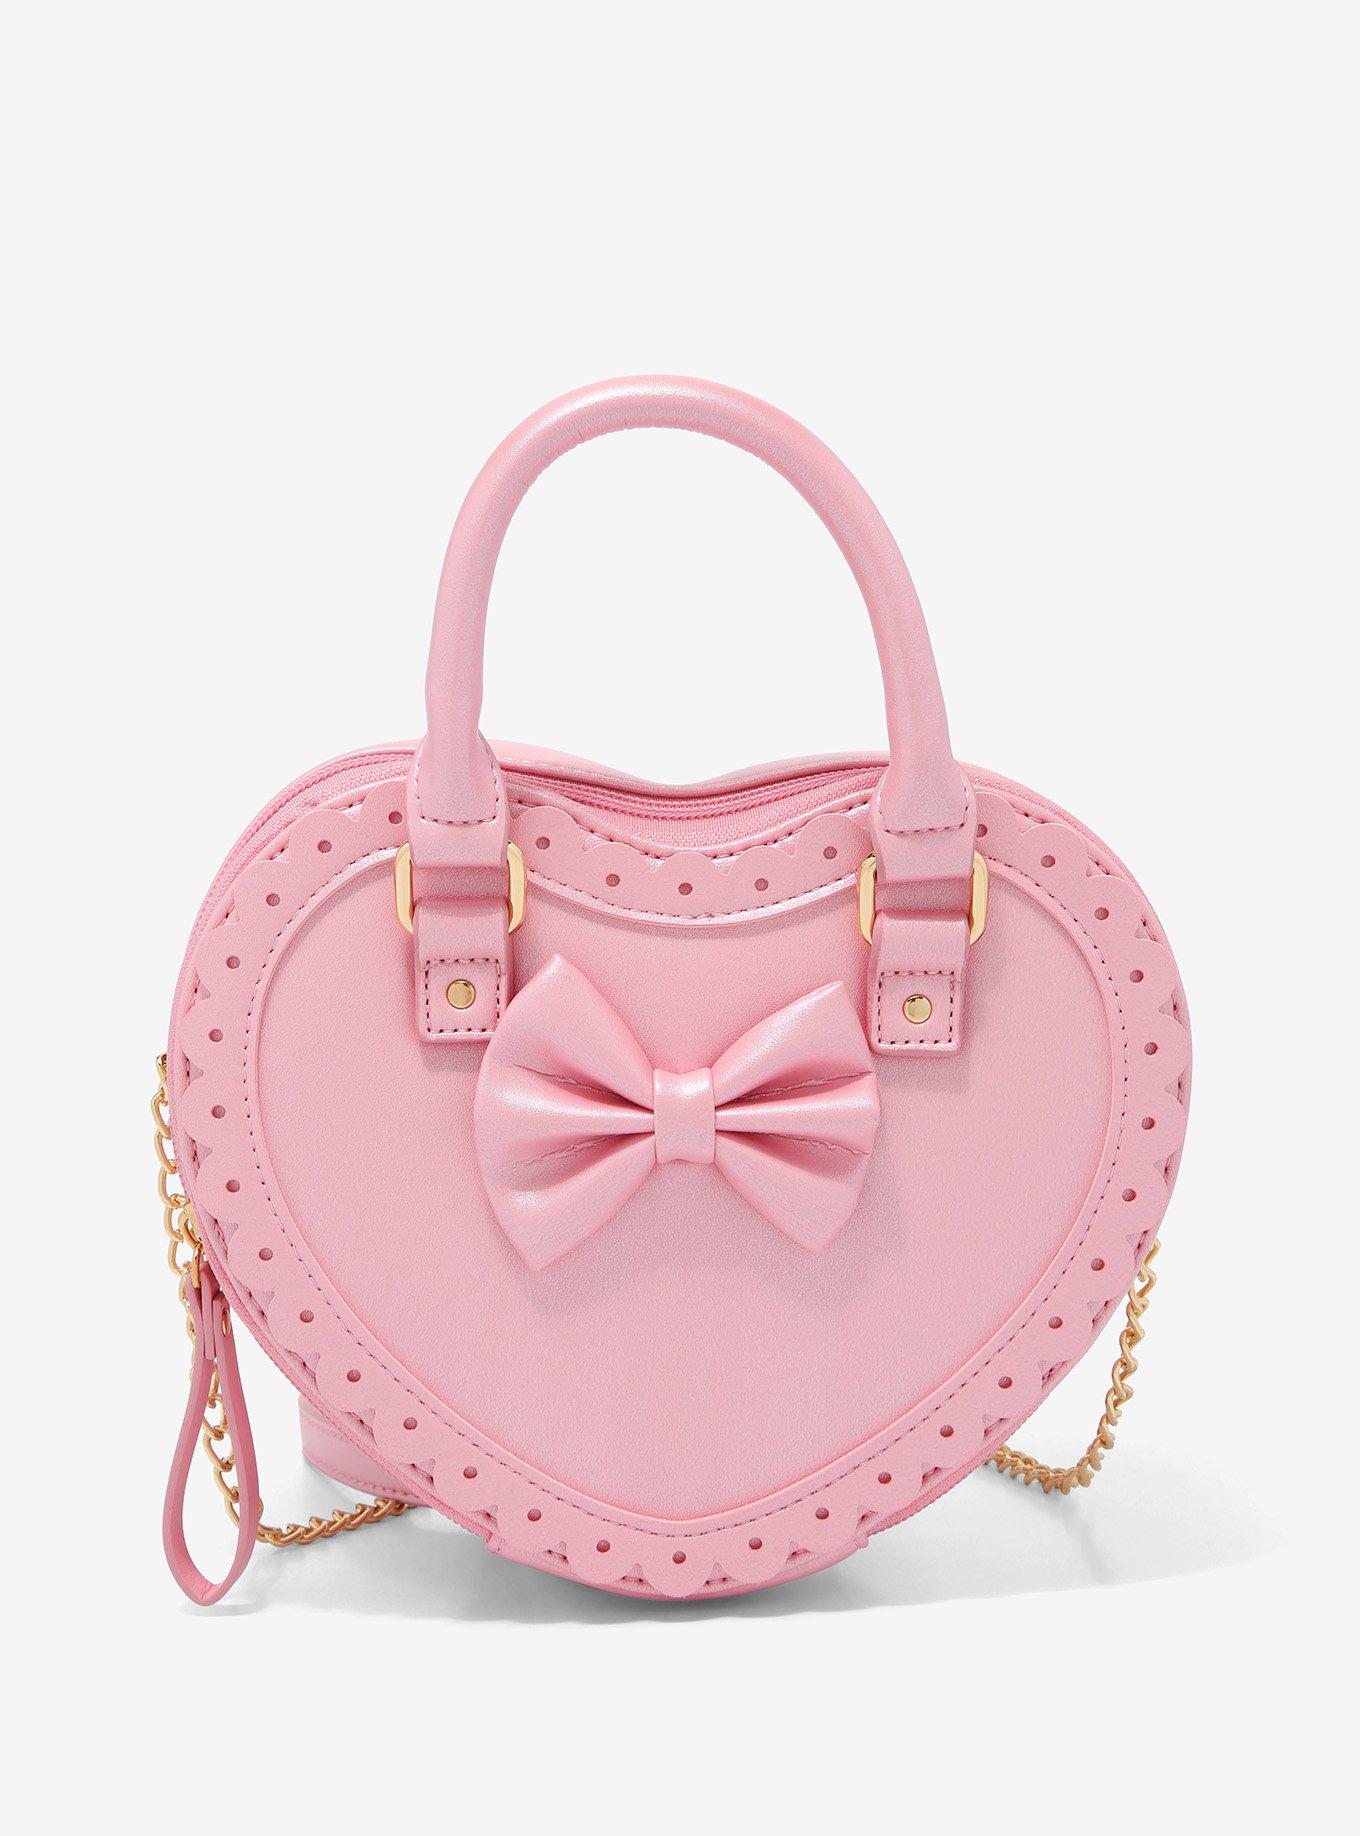 Handbags & Shoes Heart Shaped Pink Loose Change Coins Fund Saving Safe Money Box 